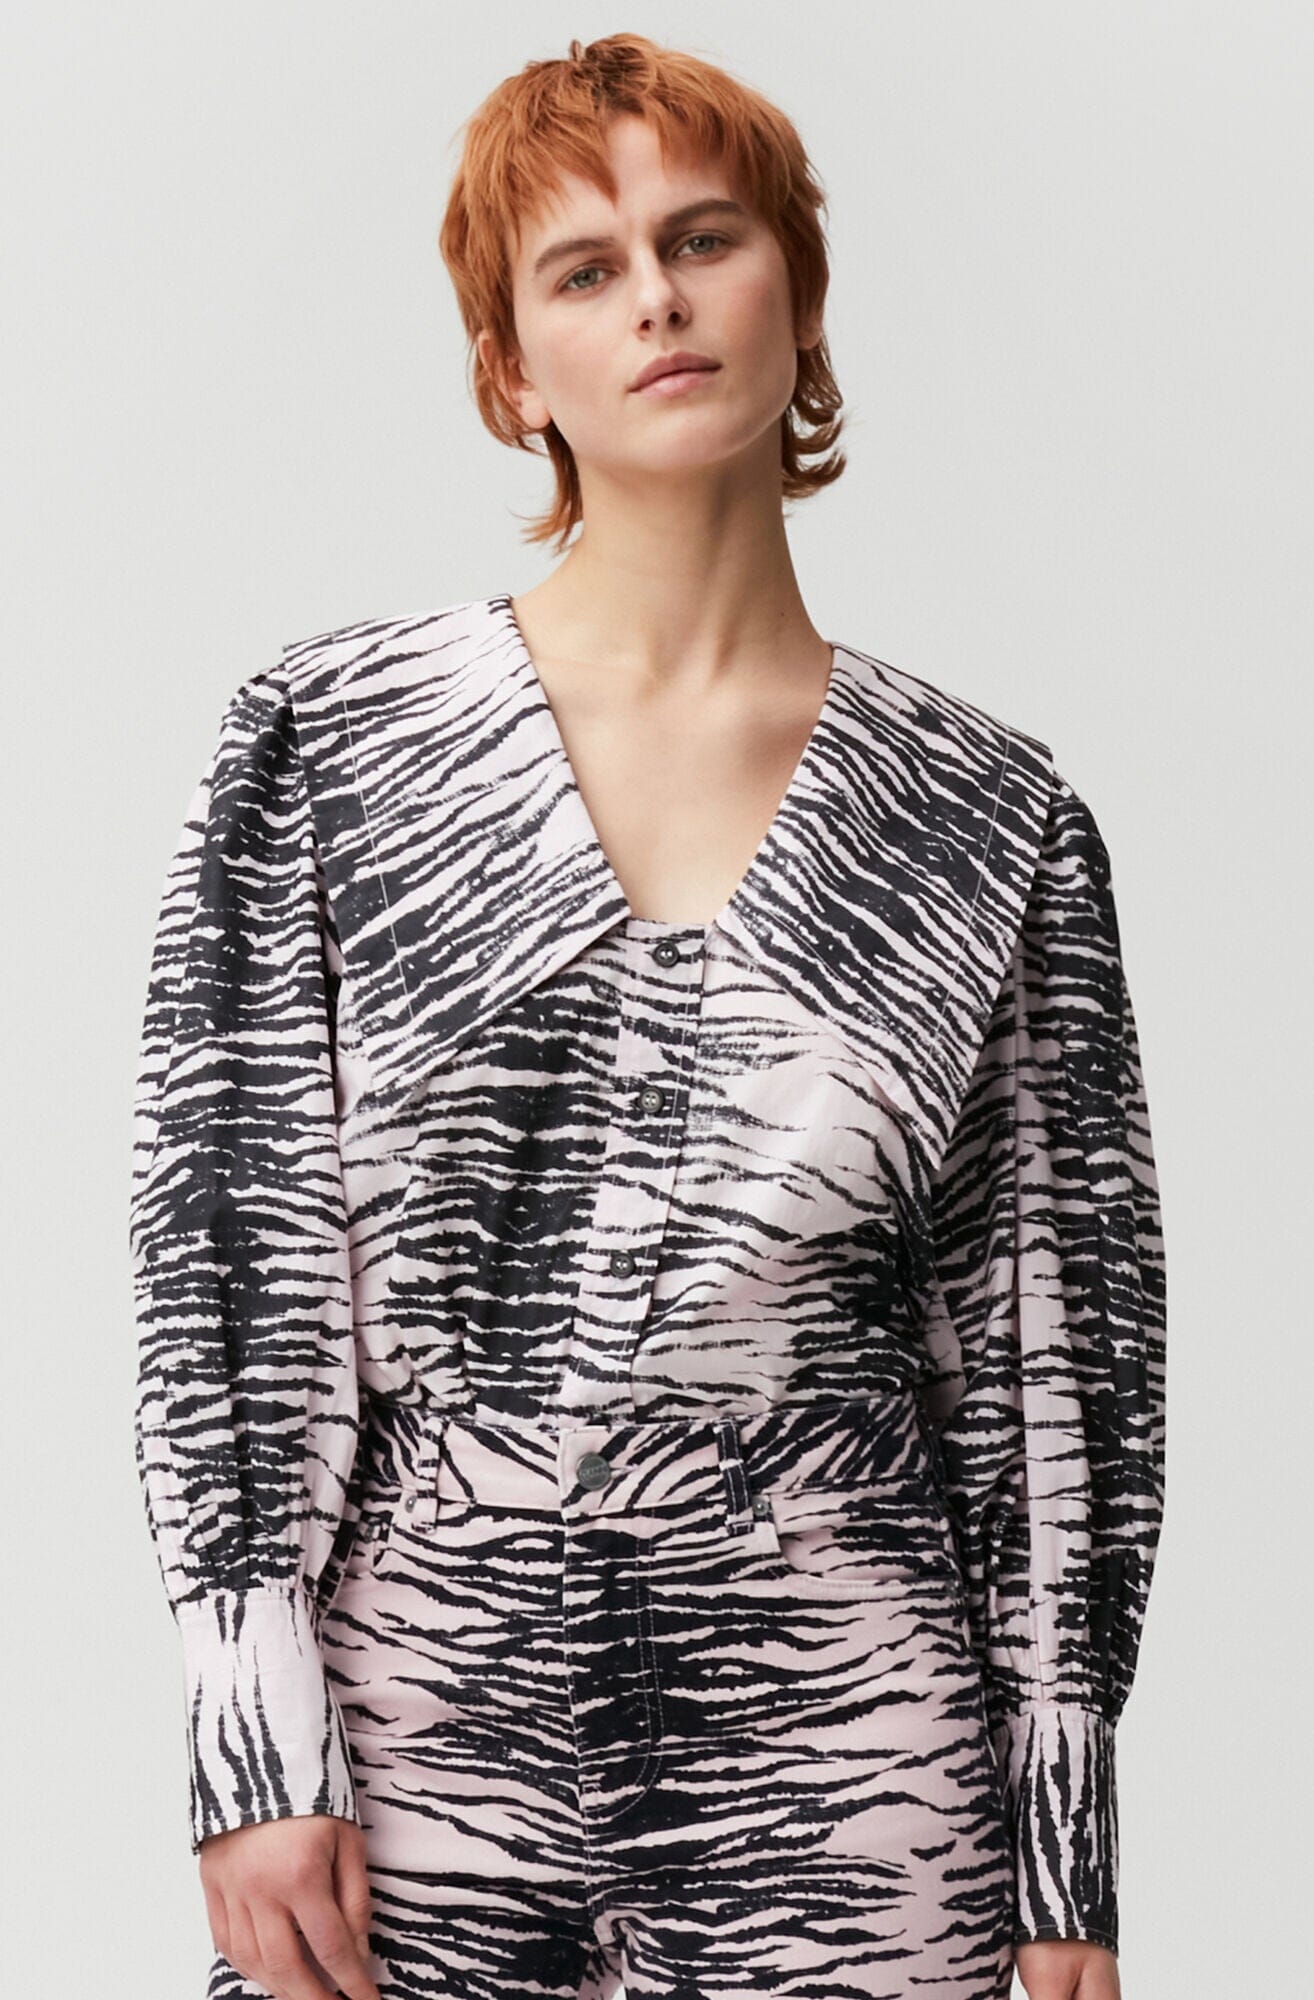 Ganni F6830 Printed Cotton V-neck Shirt Light Lilac Skjorte